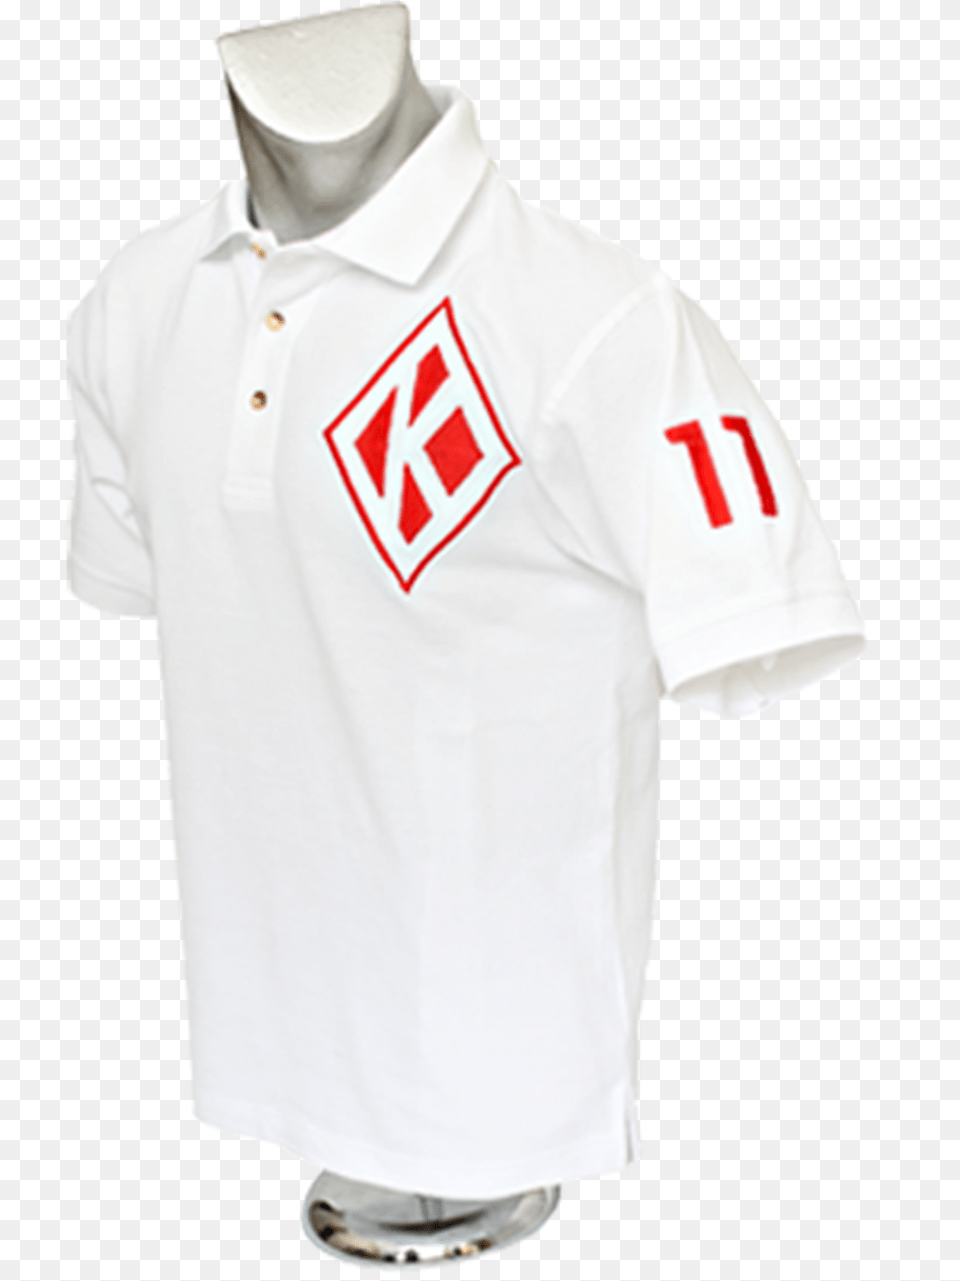 Kappa Alpha Psi Signature Polo Is A White Pique Polo Polo Shirt, Clothing, T-shirt Png Image